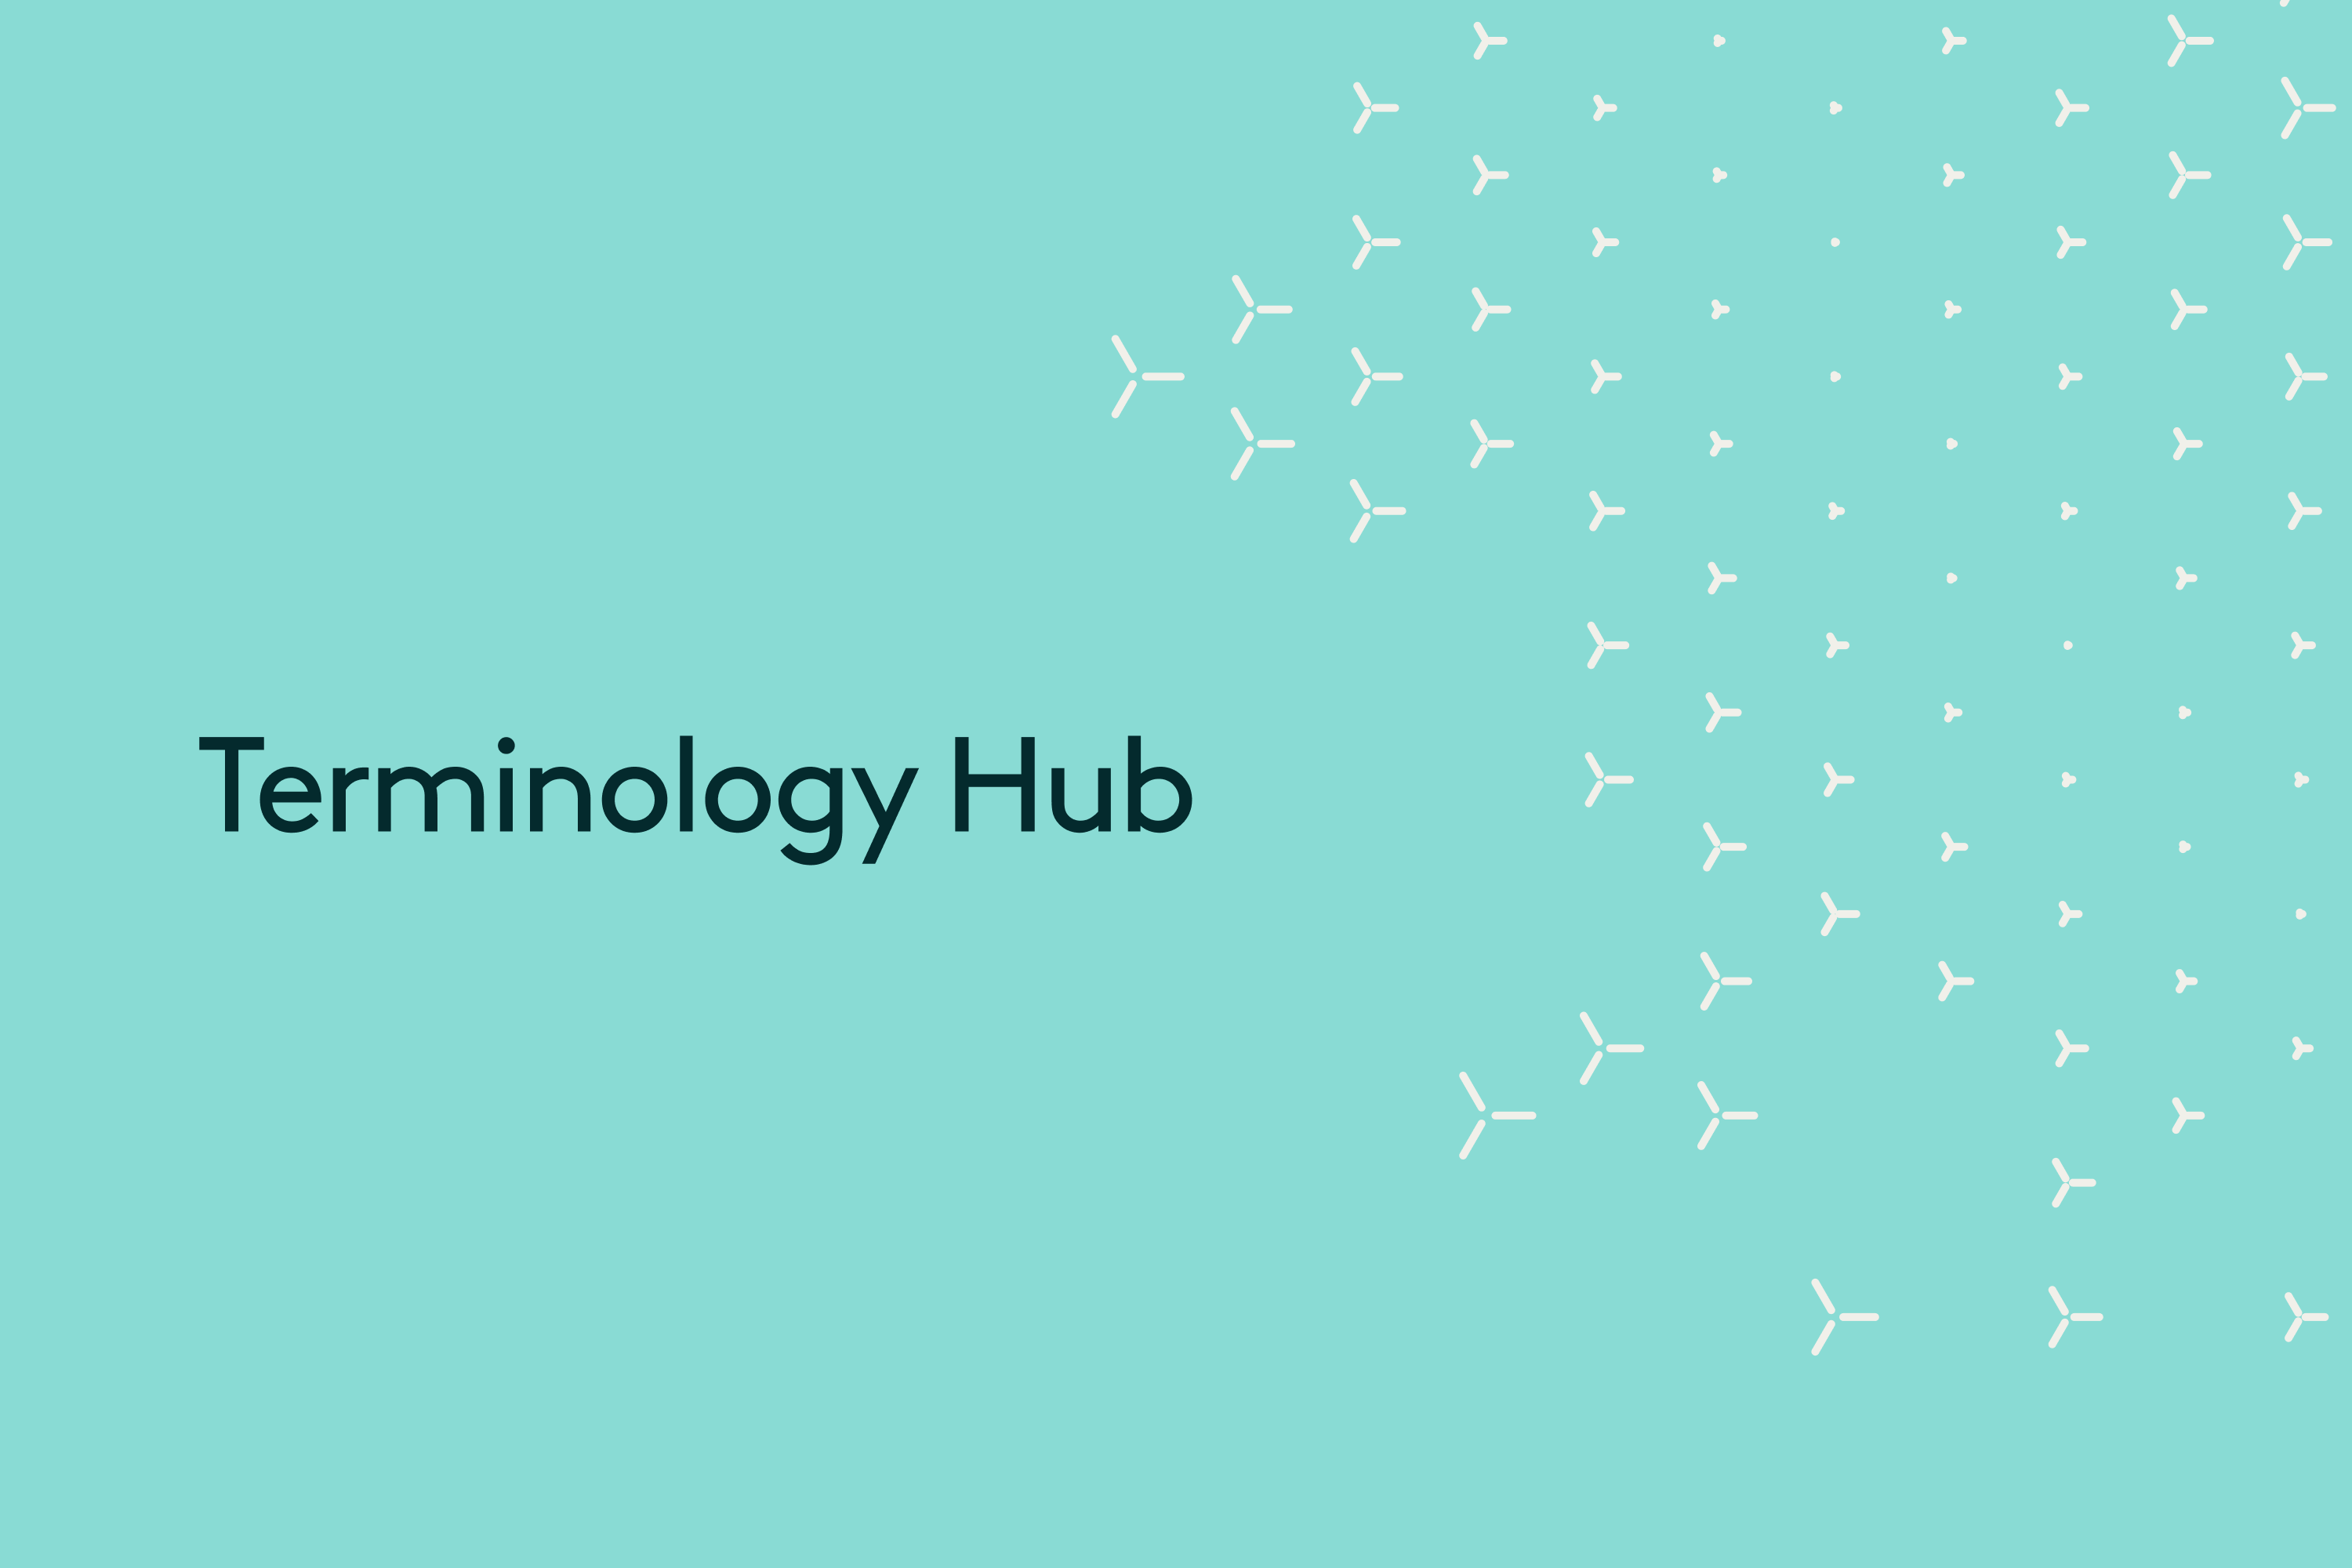 Terminology Hub